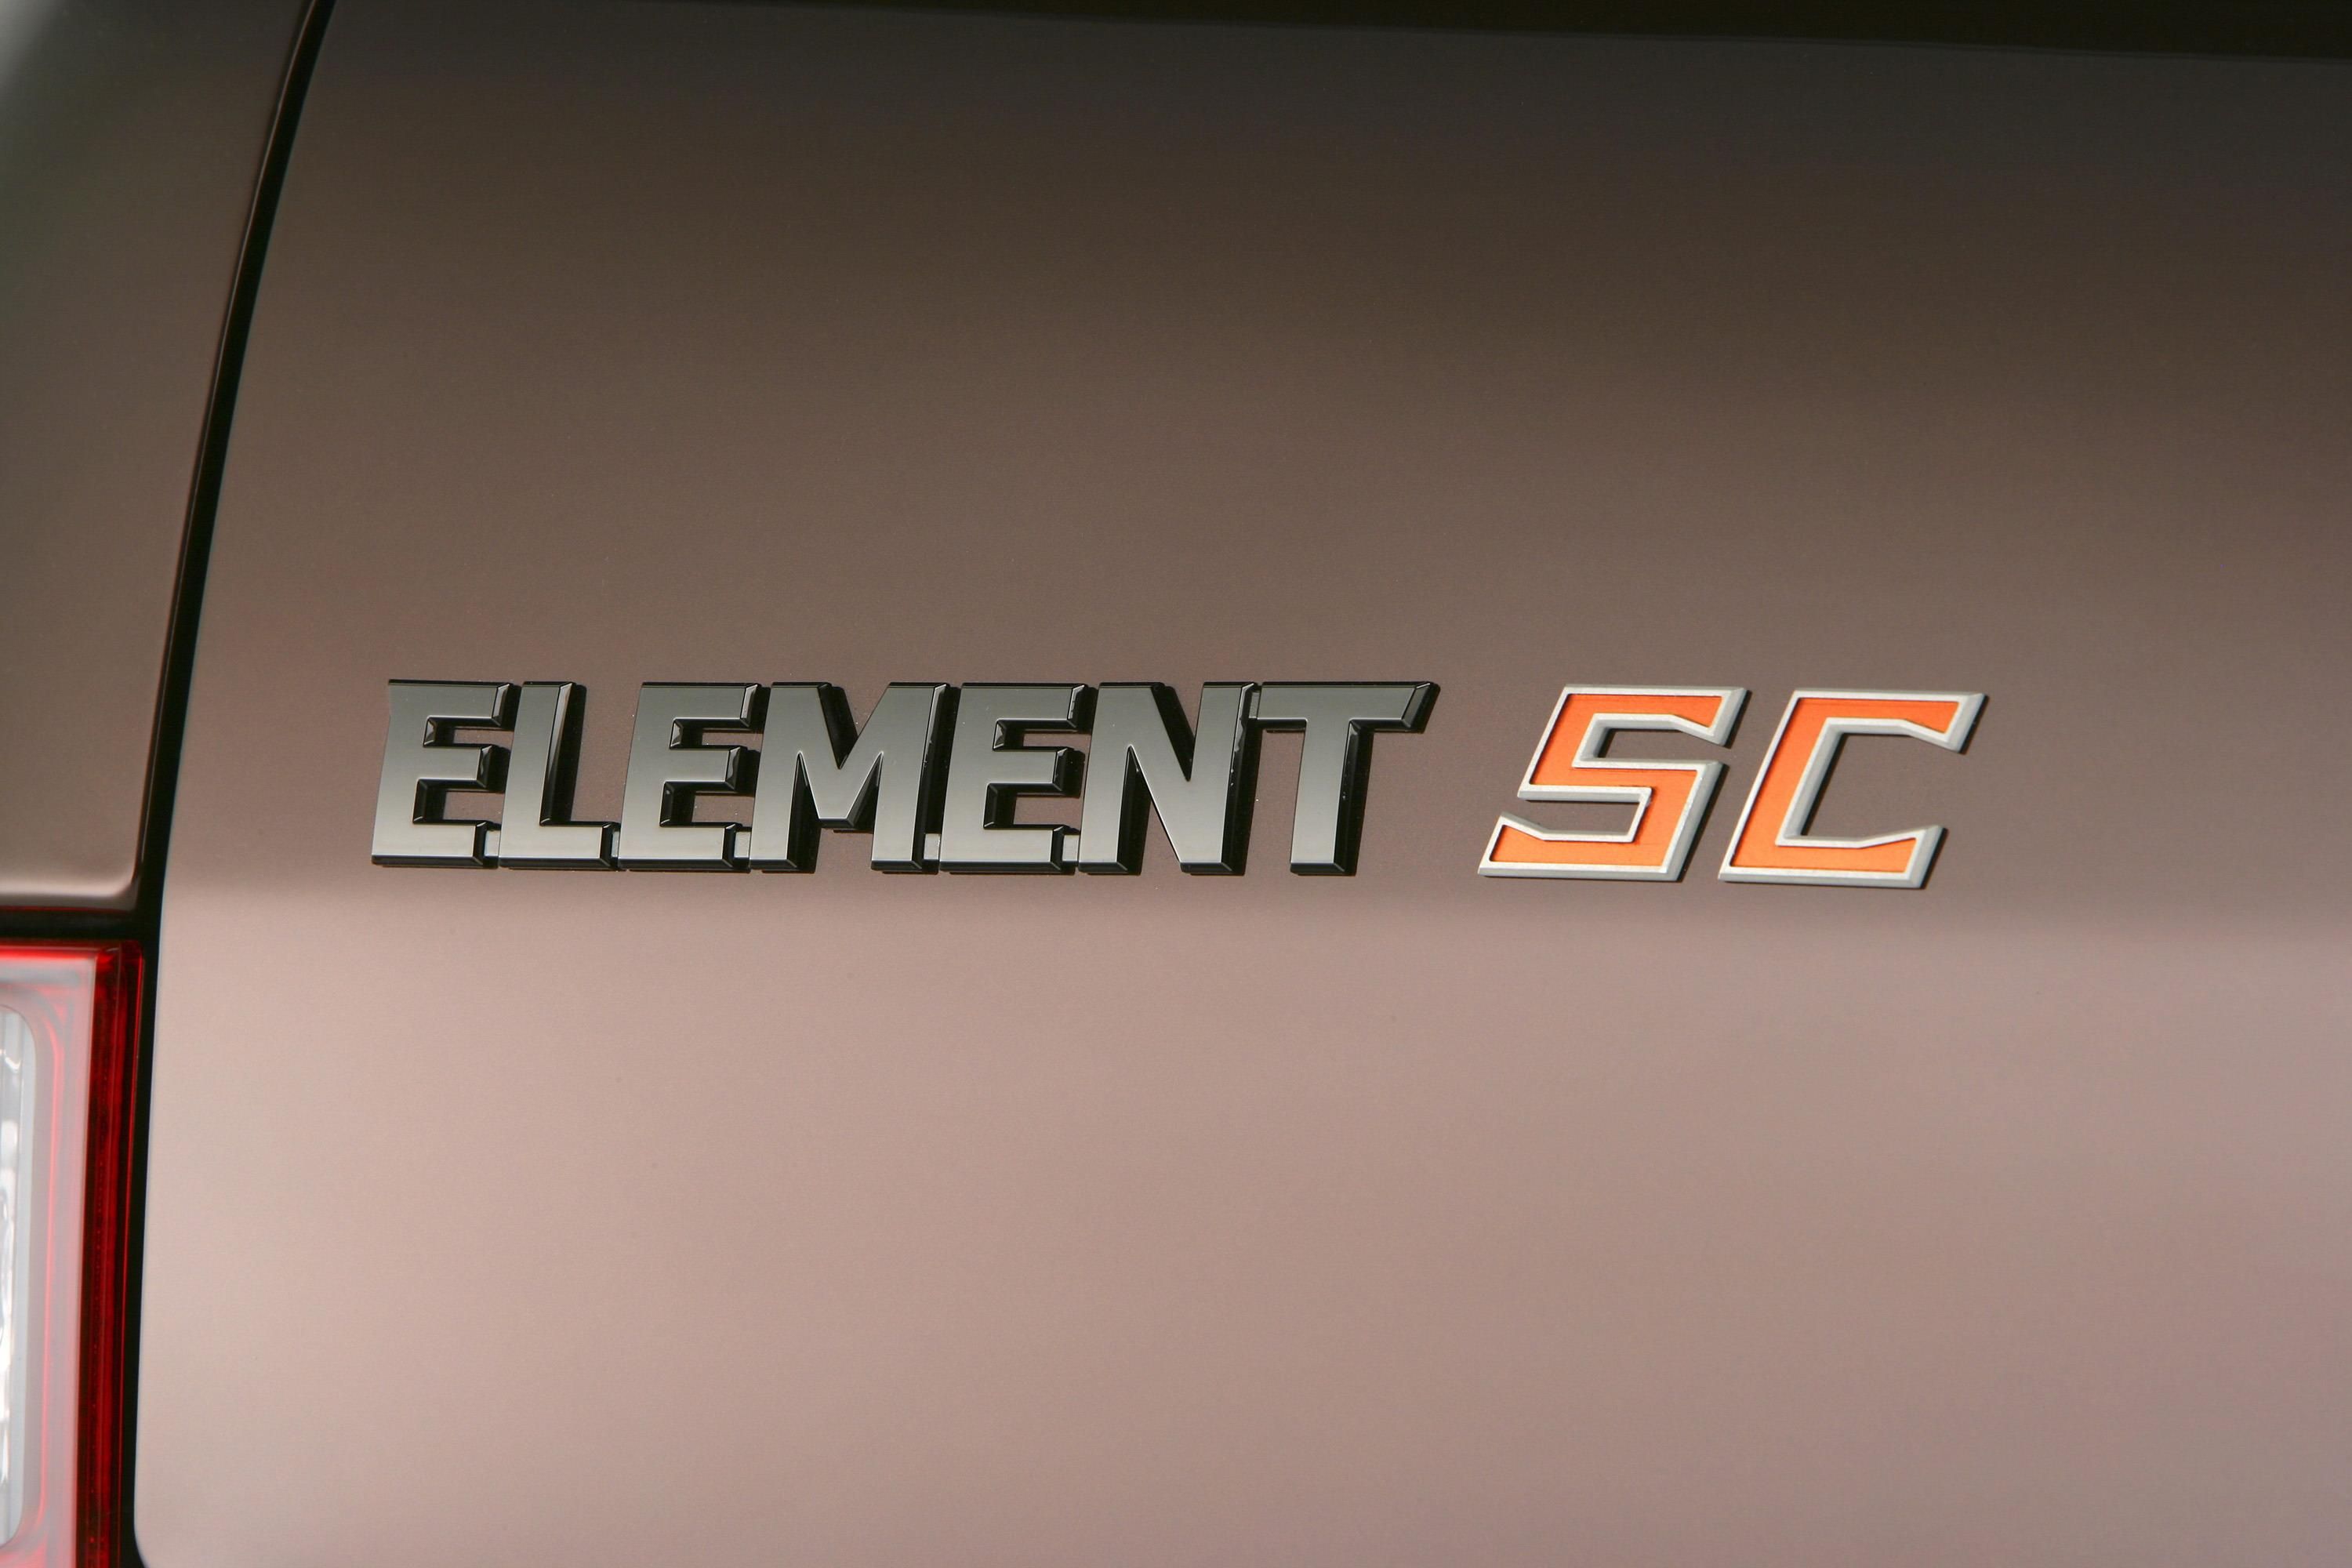 2007 Honda Element SC